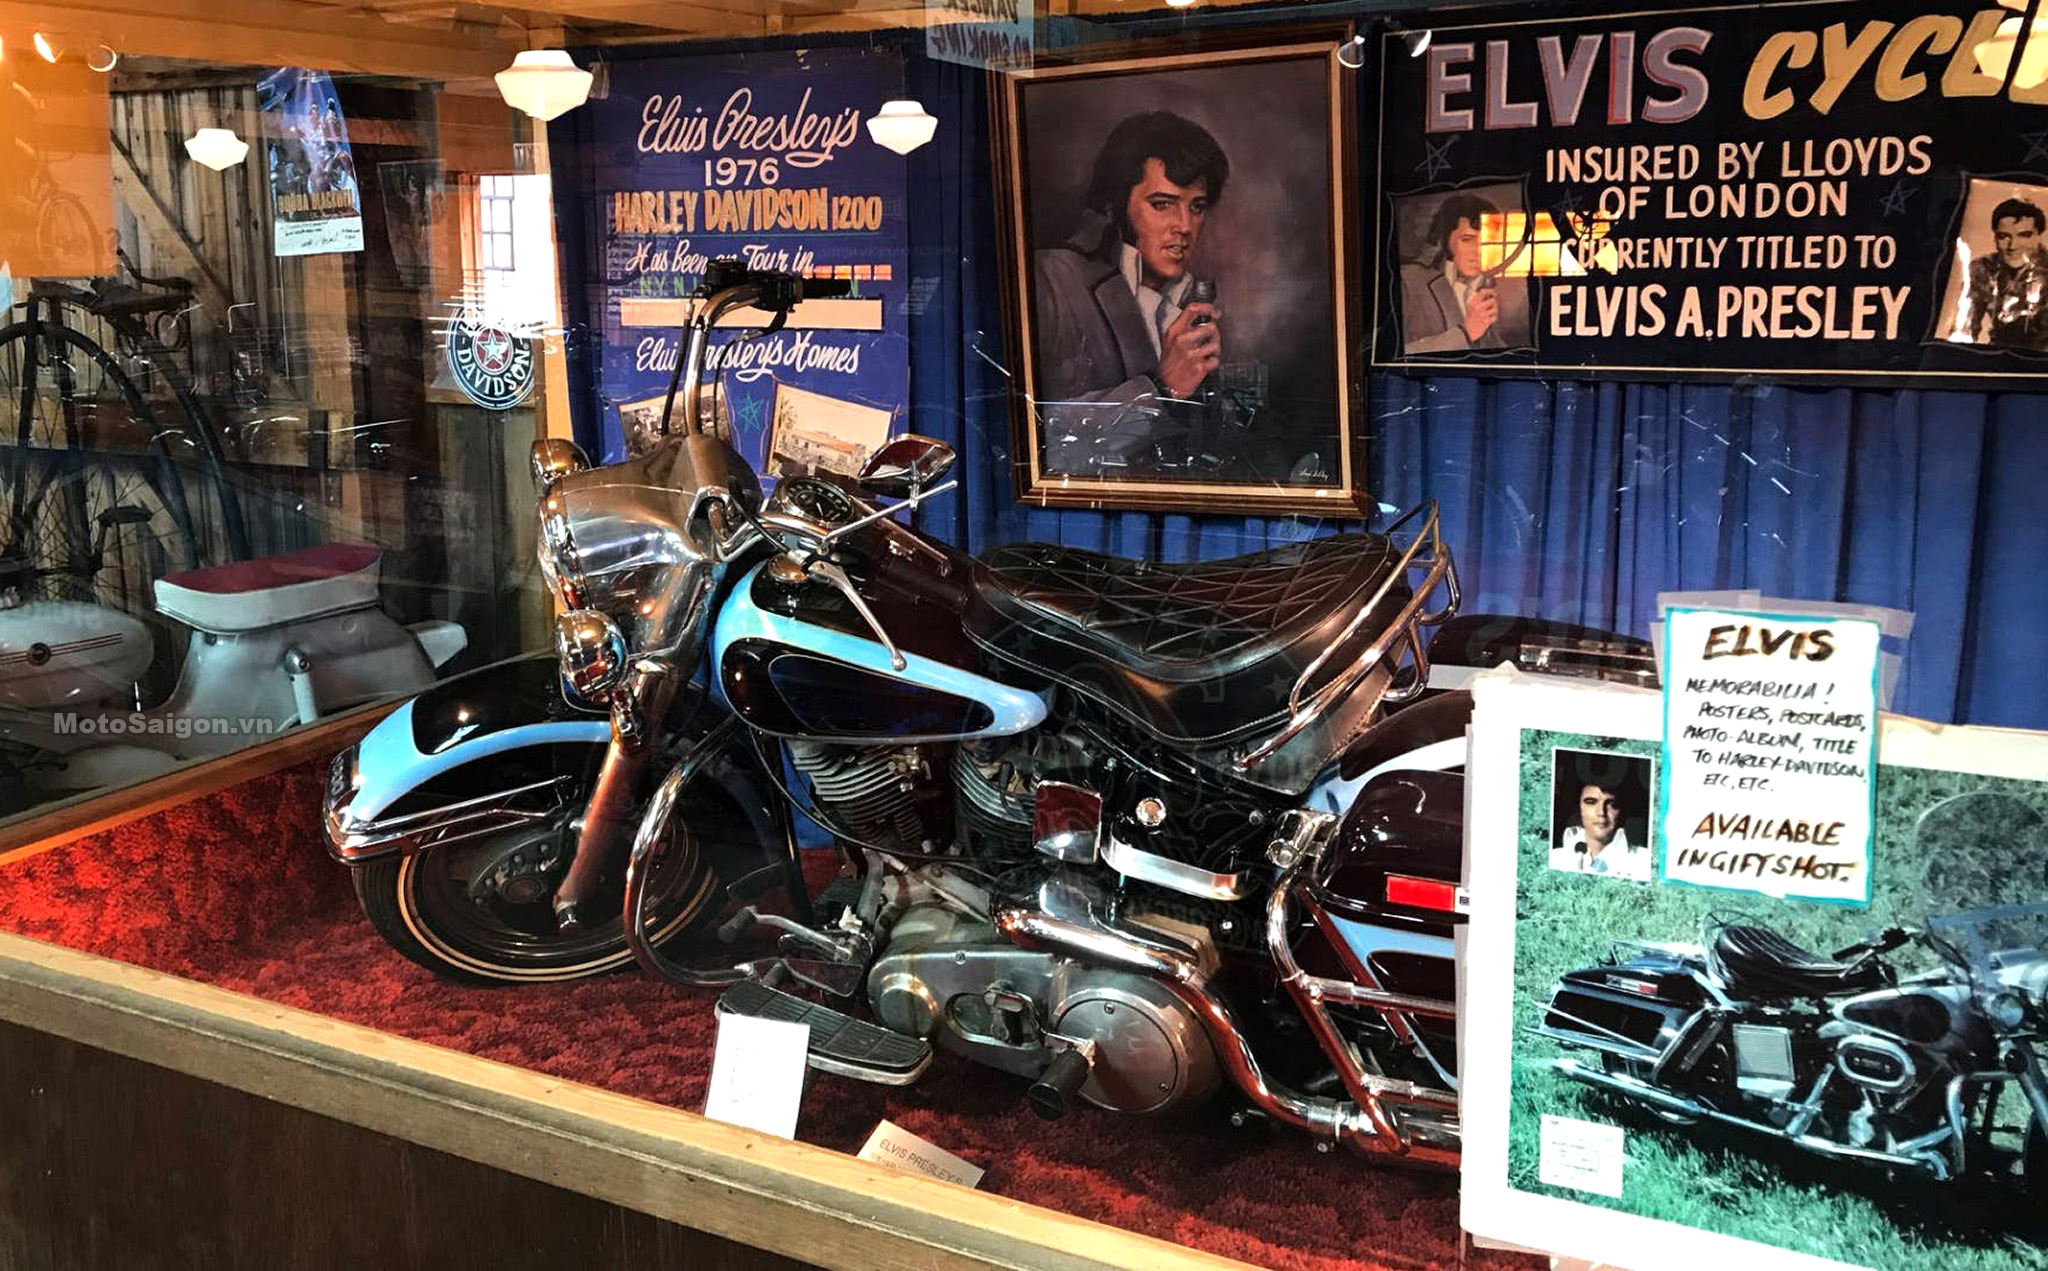 Moto của Elvis Presley: Harley-Davidson Electra Glide 1976 có giá bán 18 tỷ đồng?